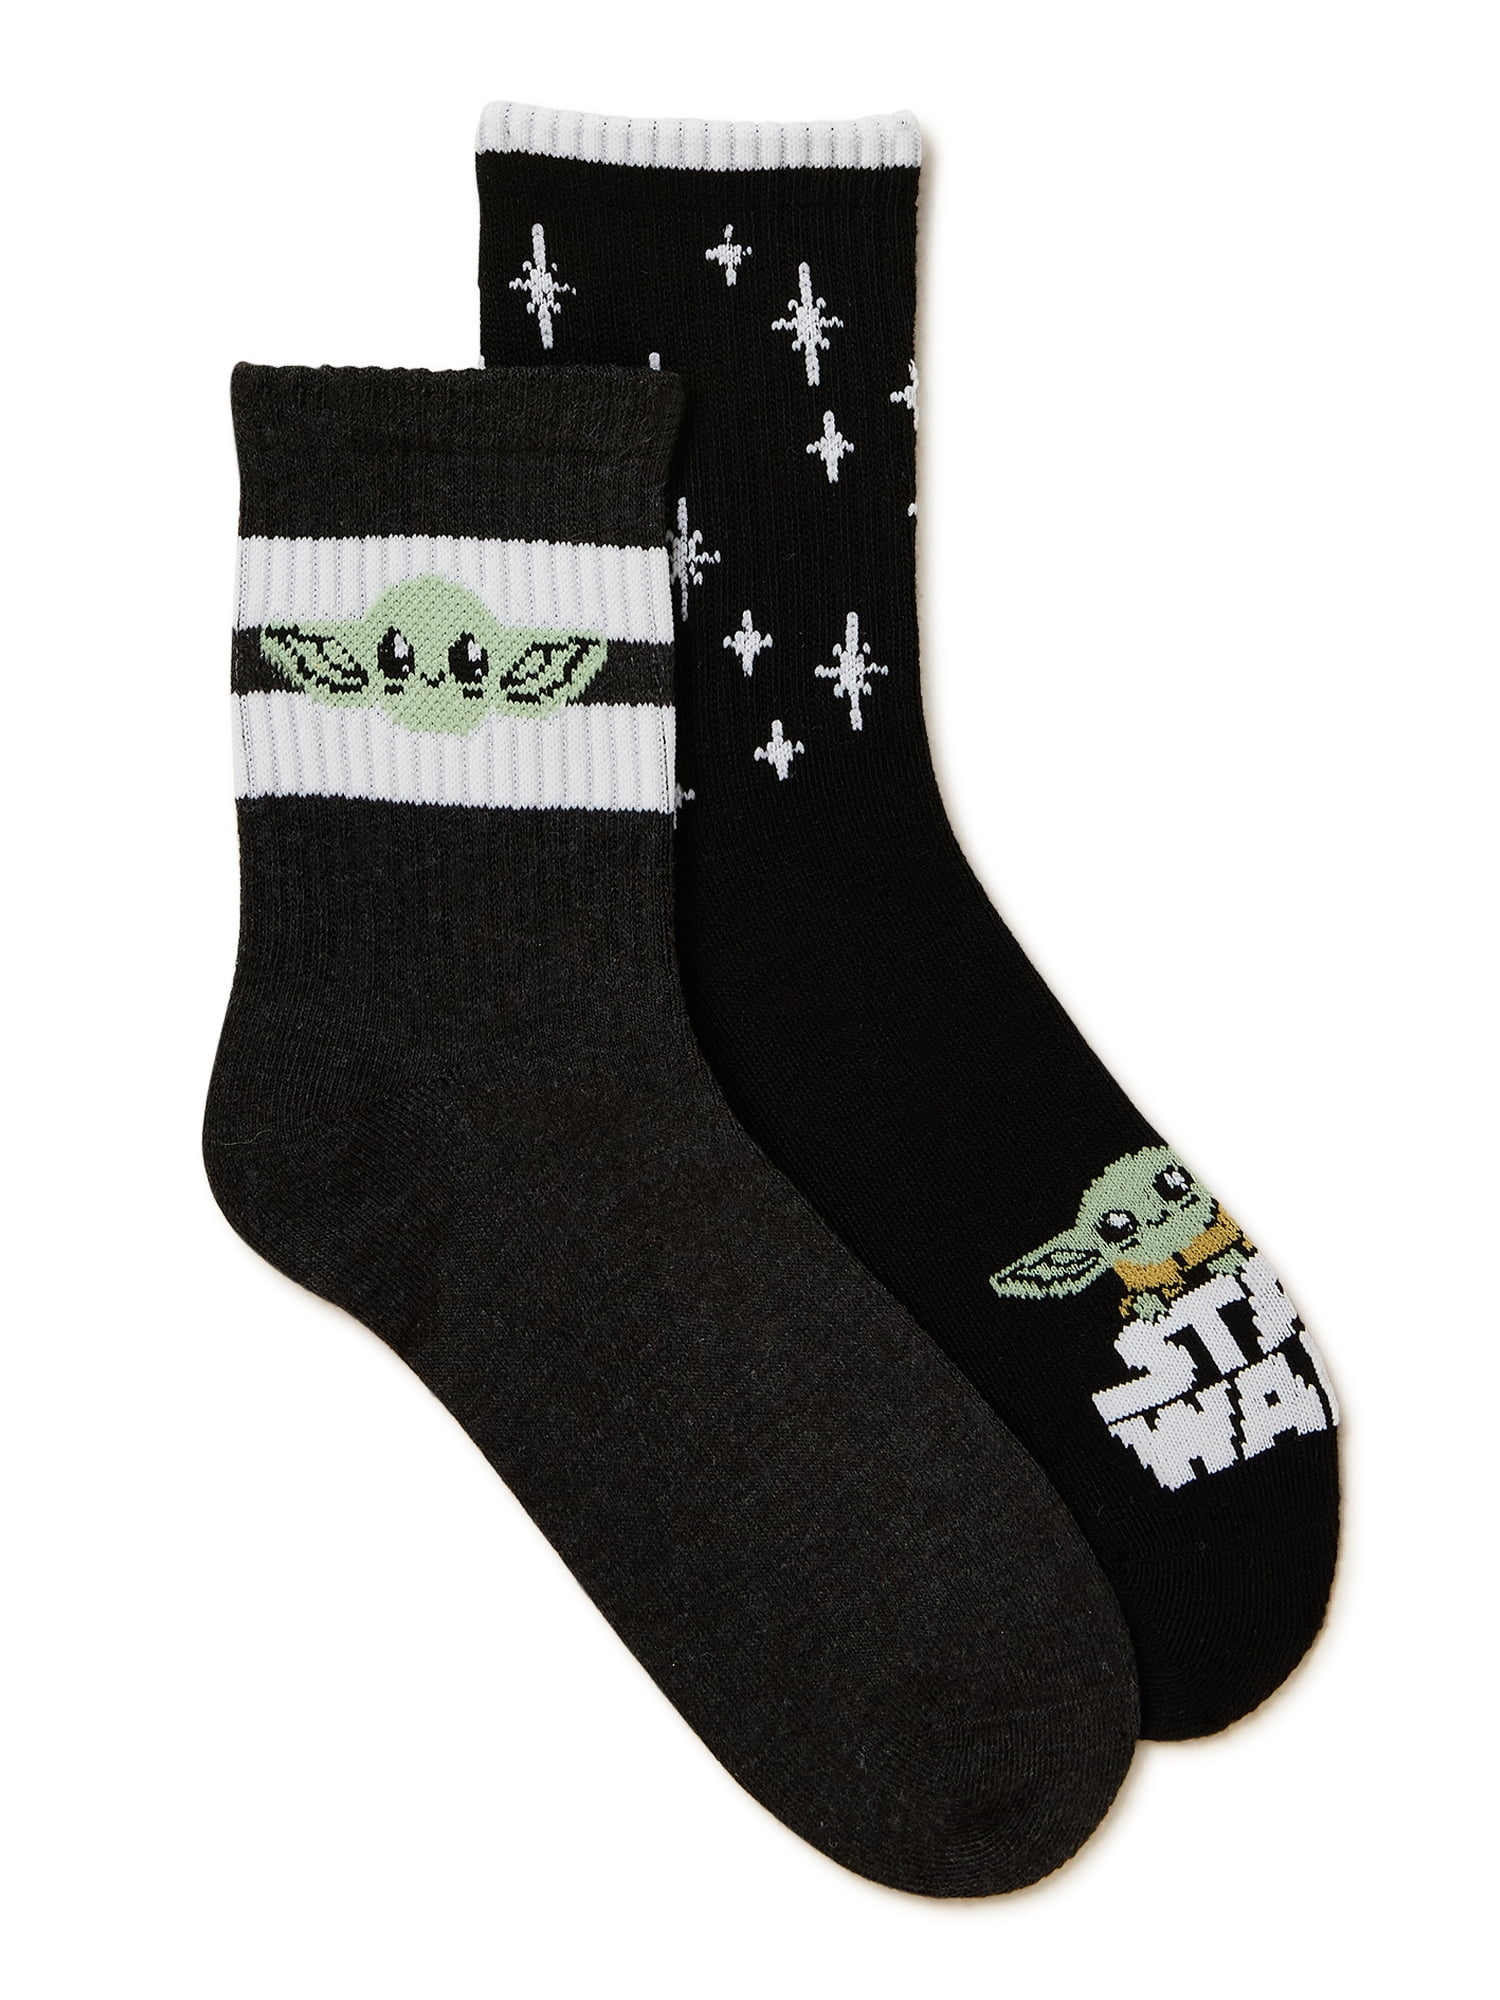  Disney Mens Socks Baby Yoda Crew Socks 5 Pack Star